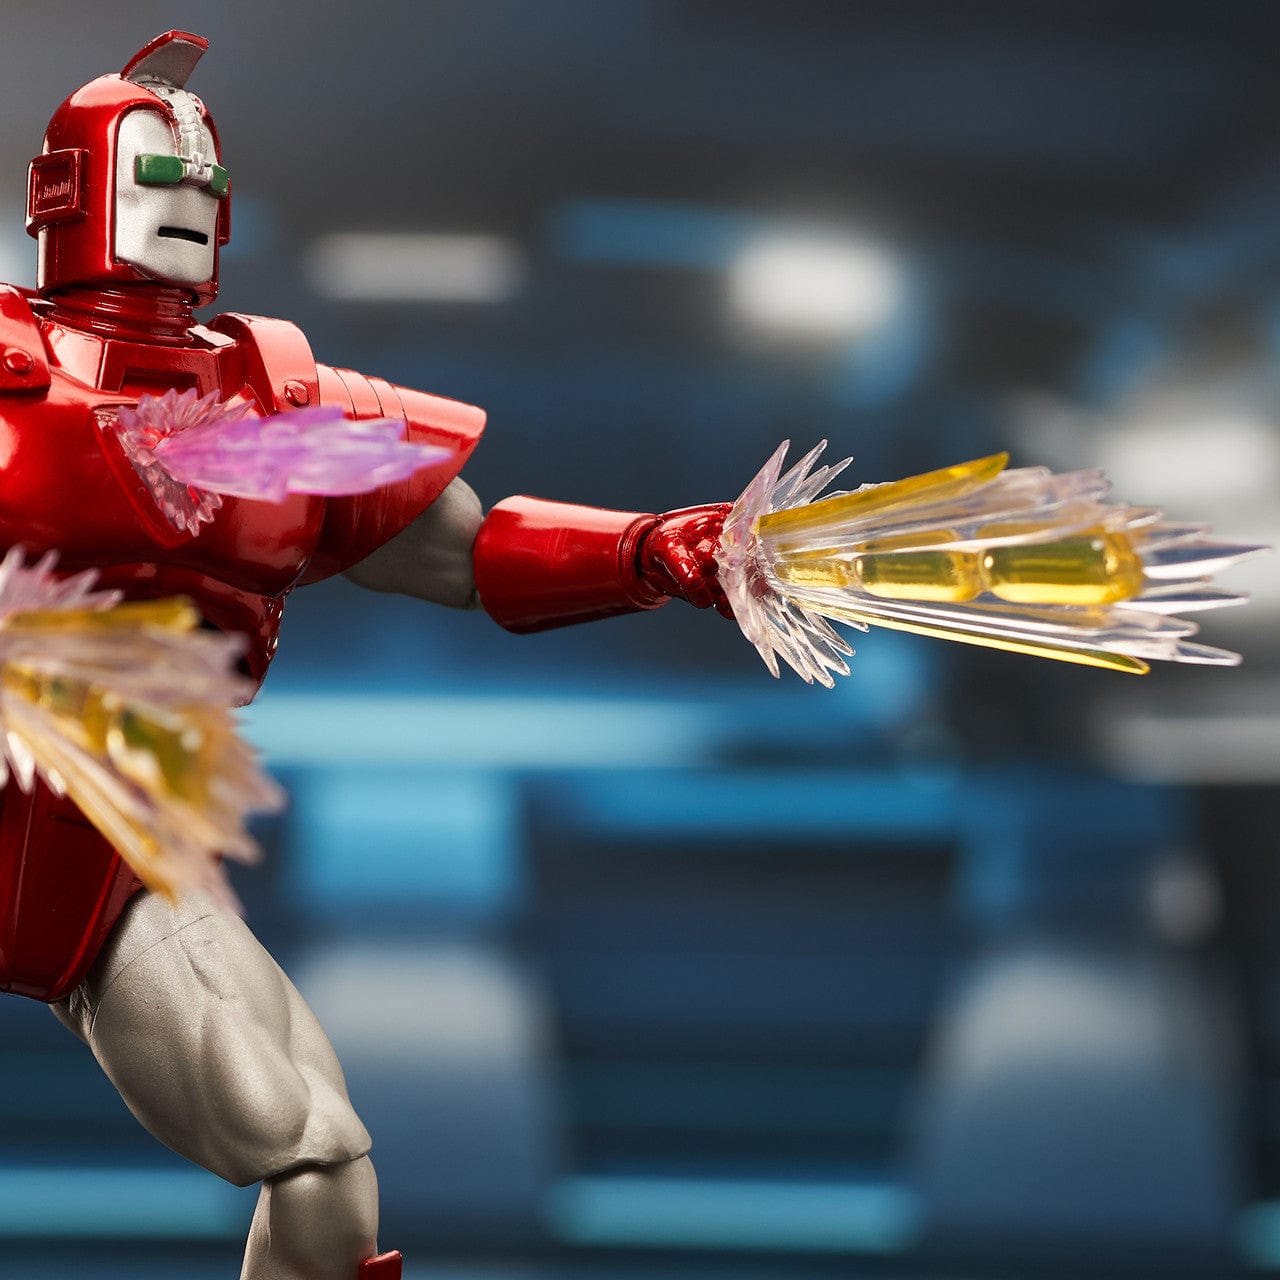 Diamond Select Toys Marvel Select Silver Centurion Iron Man Action Figure